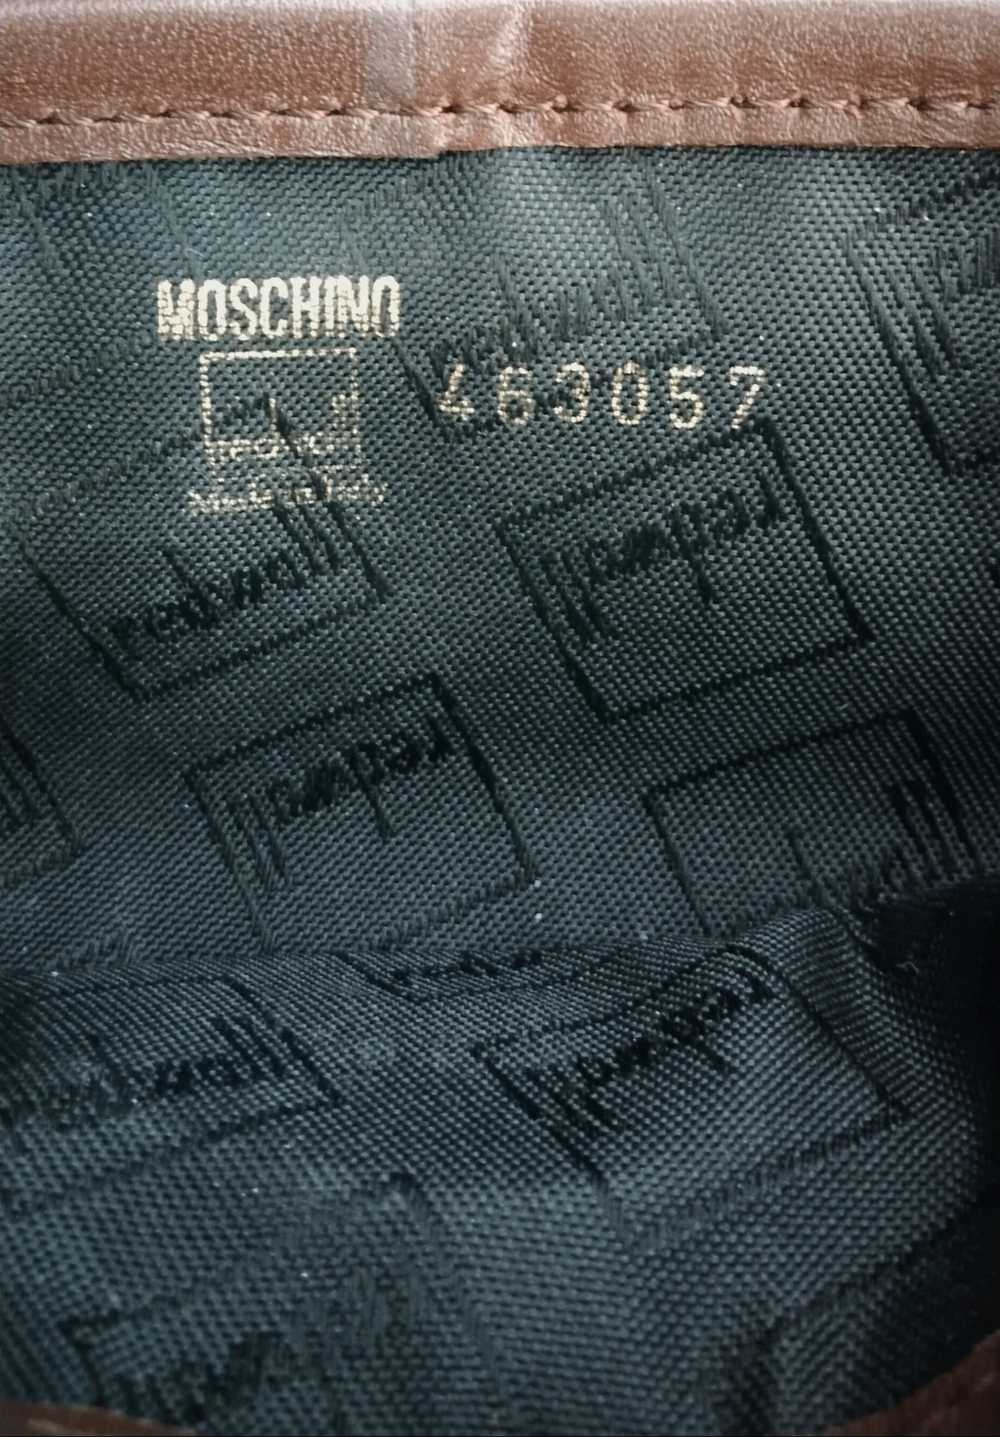 Moschino MOSCHINO REDWALL VINTAGE HANDCARRY - image 6